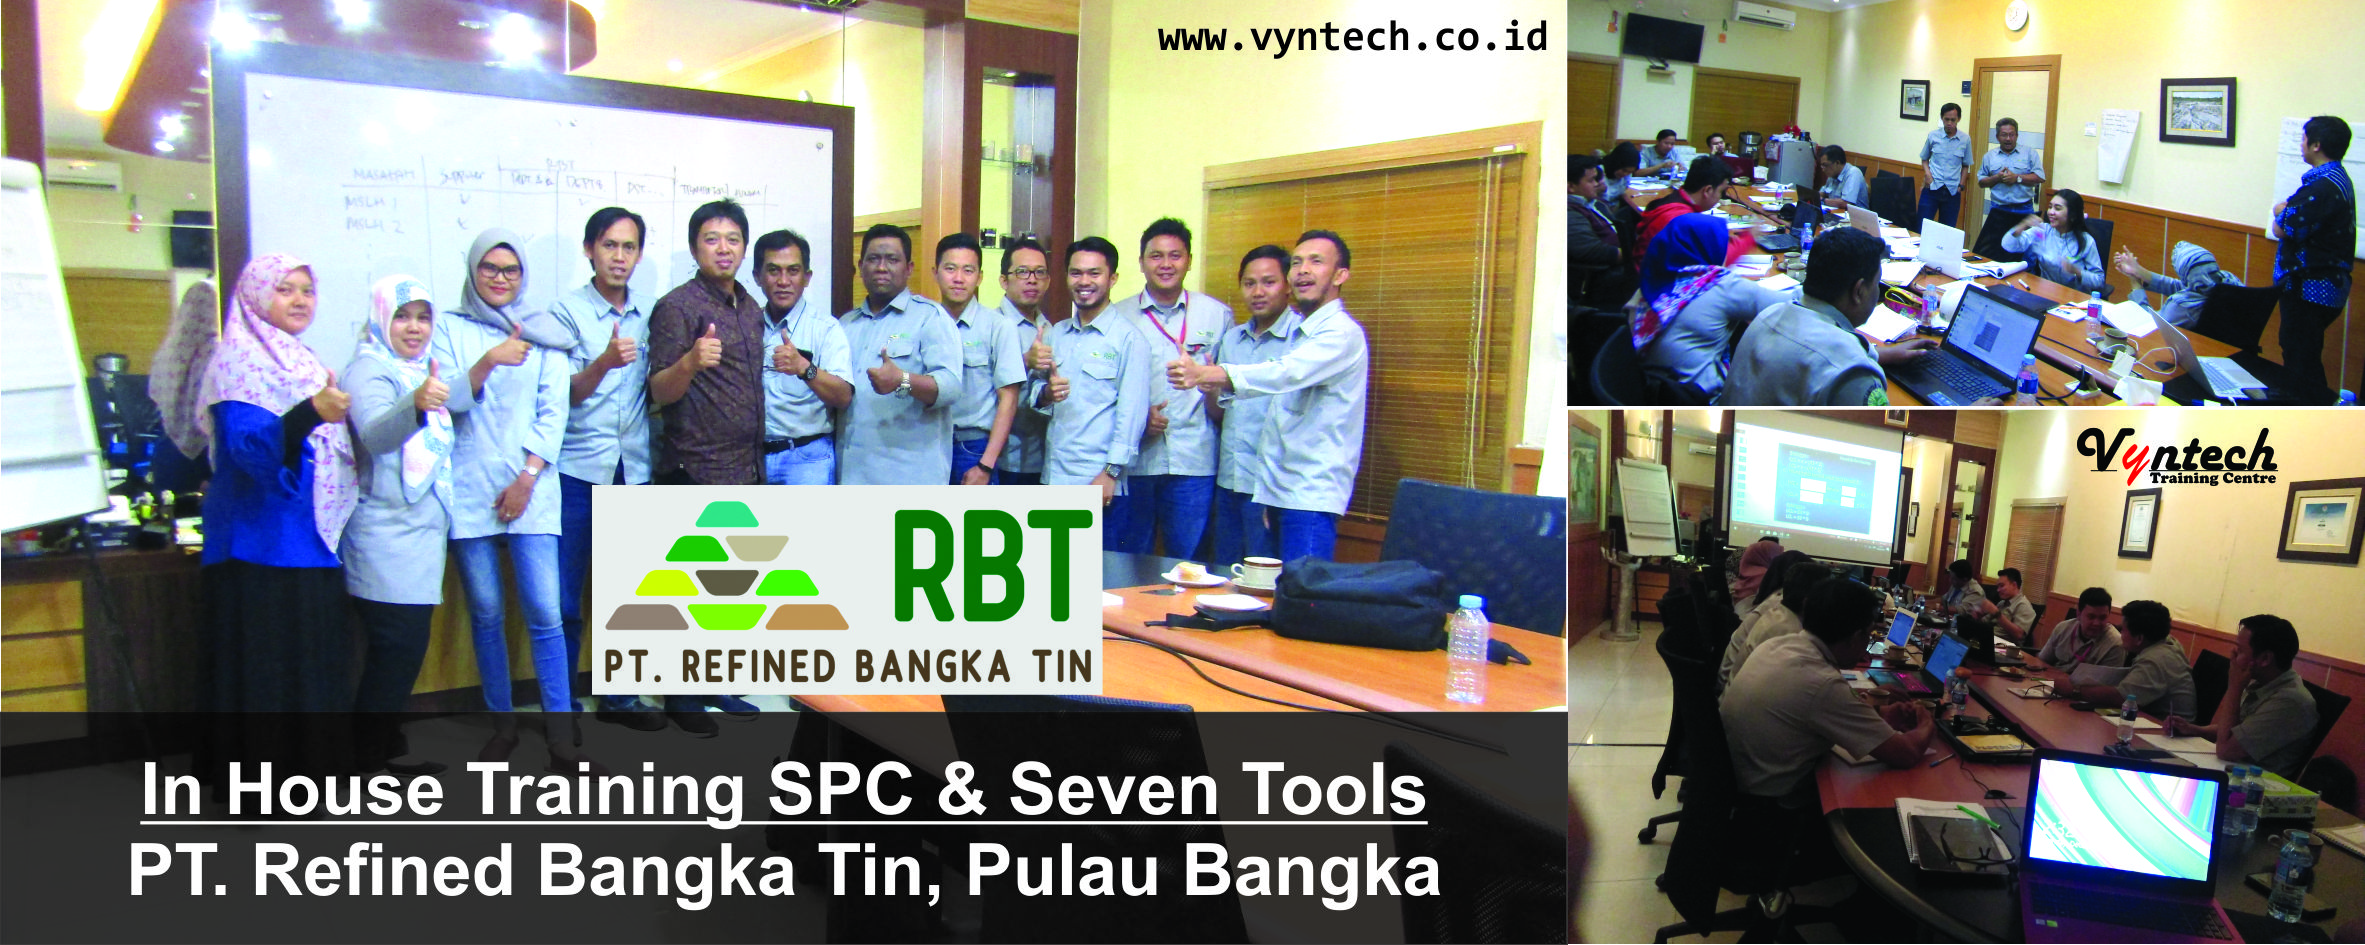 20181210 Training IHT SPC & Seven Tools - PT. Refined Bangka Tin